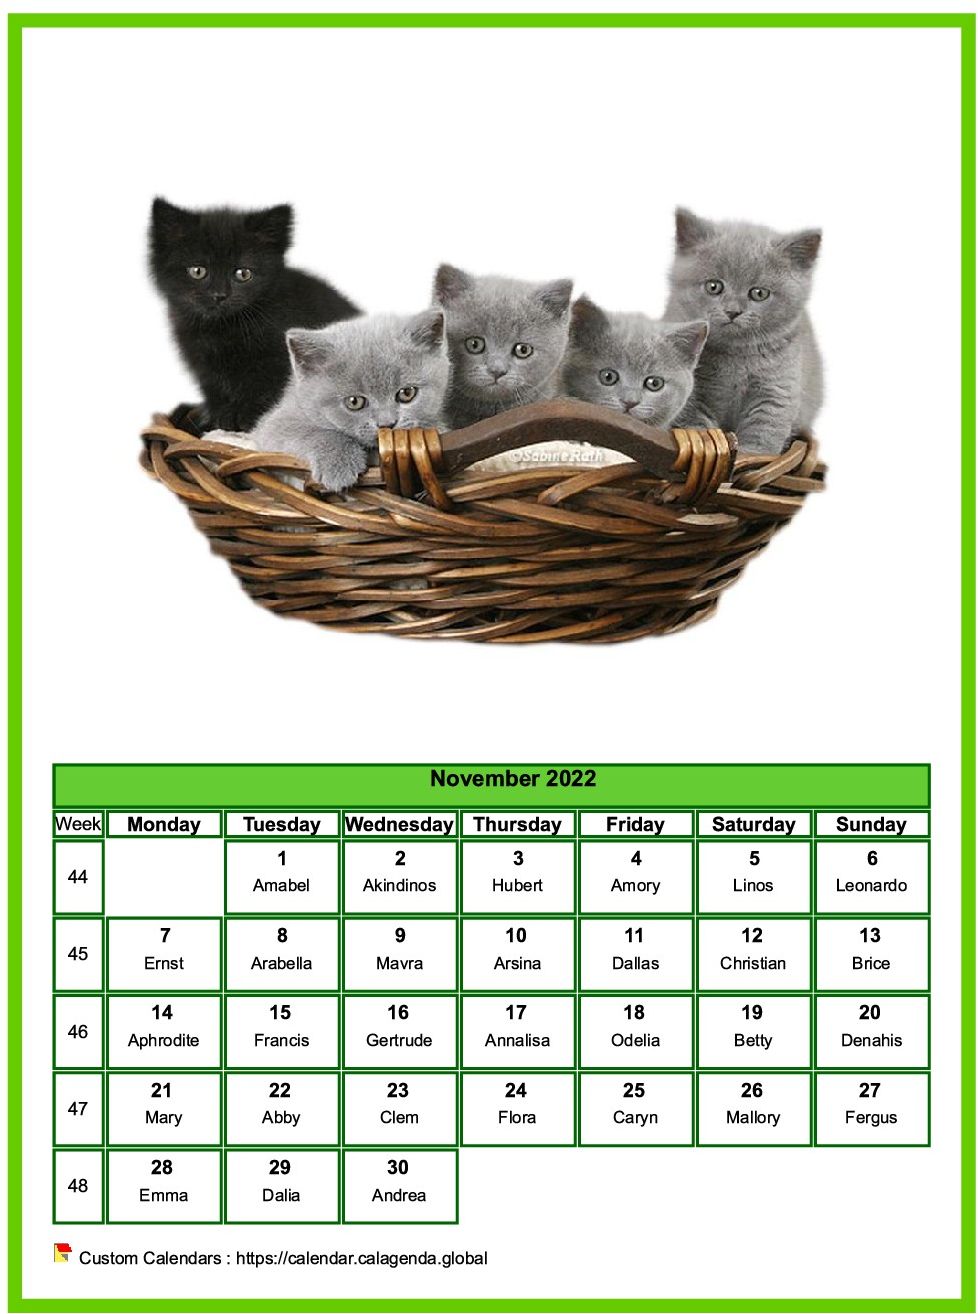 Calendar november 2022 cats